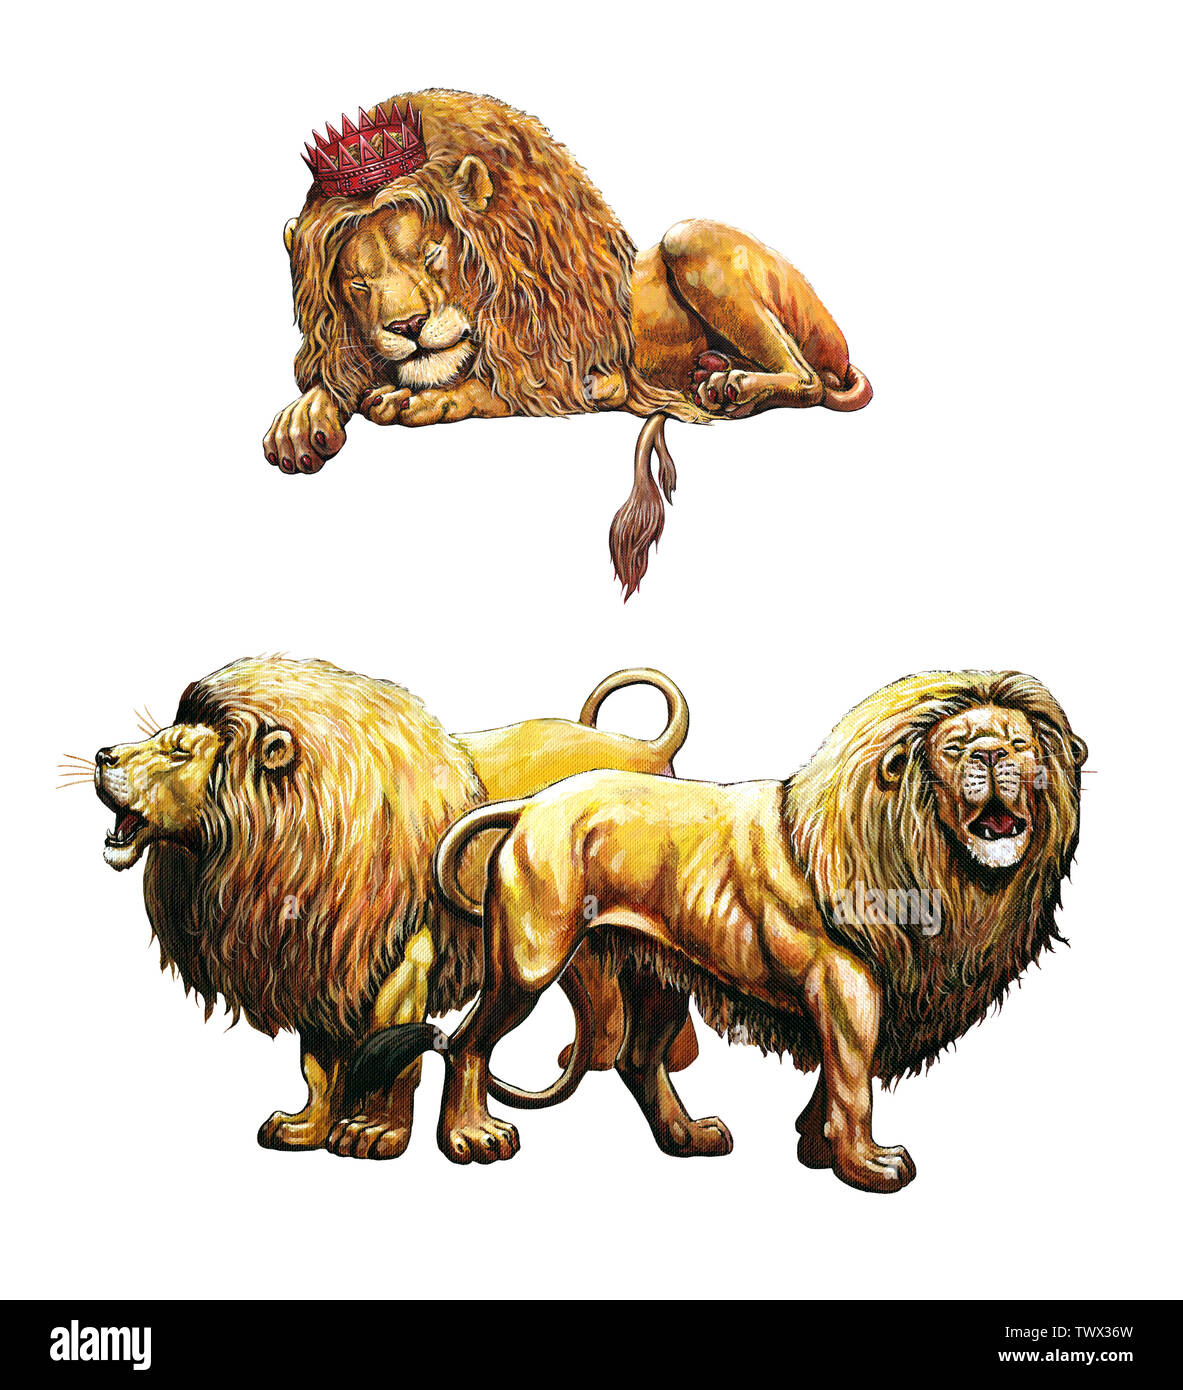 Sleeping and roaring lion. 2 Lions illustrations. Big cat acrylic illustration. Stock Photo